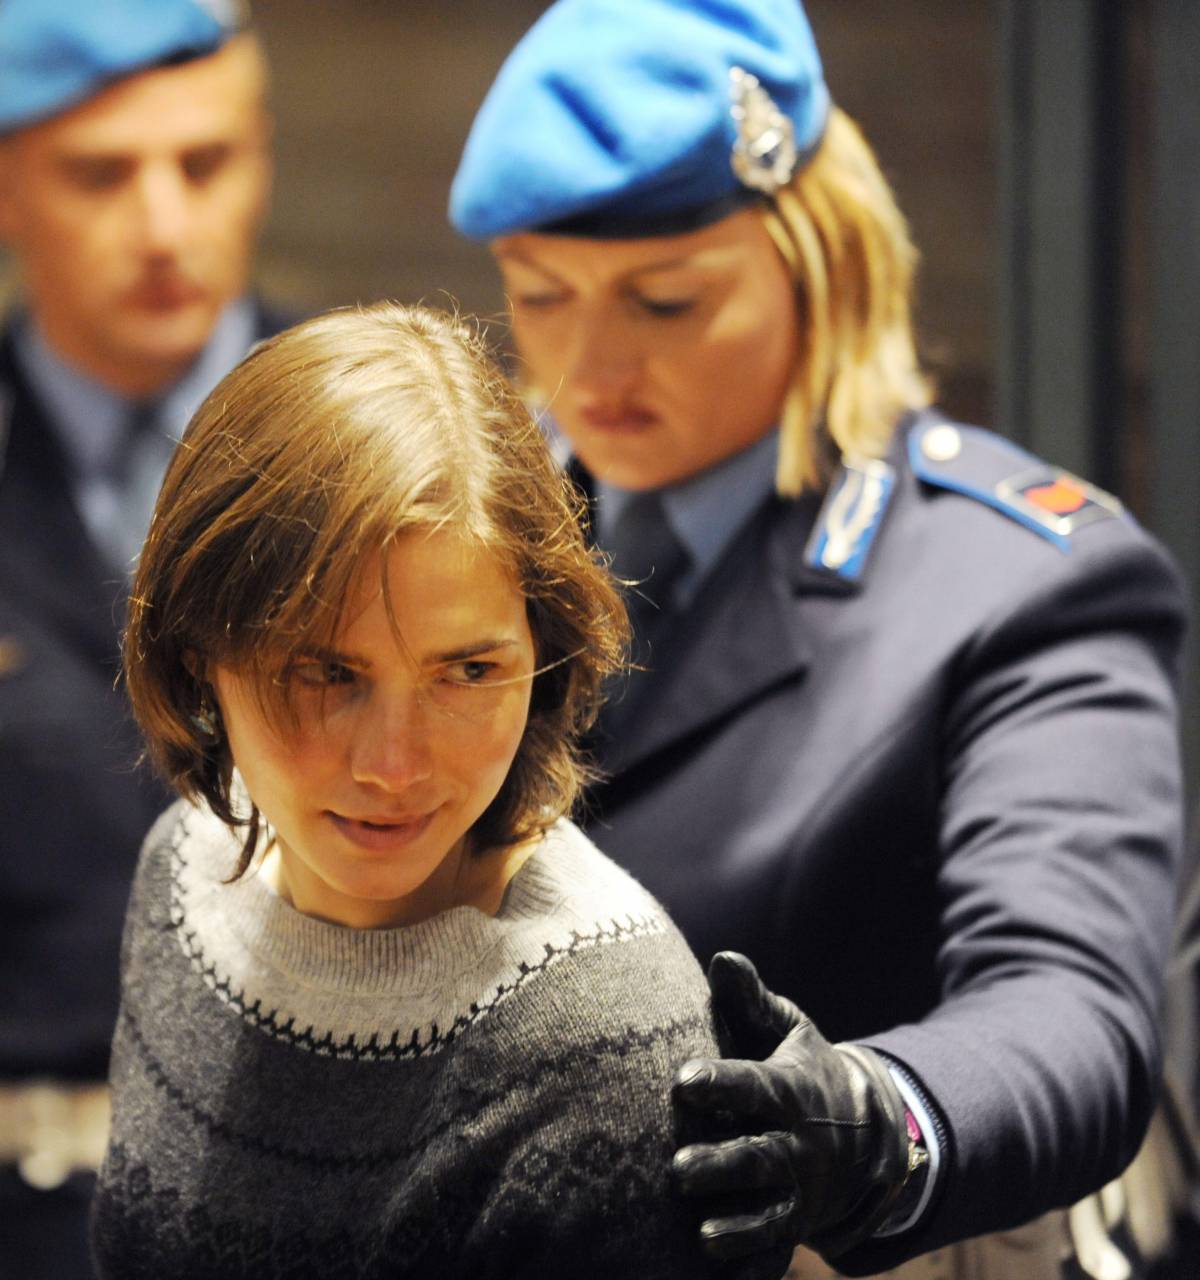 Perugia, caso Meredith 
Amanda crolla e piange: 
"Accusata ingiustamente"